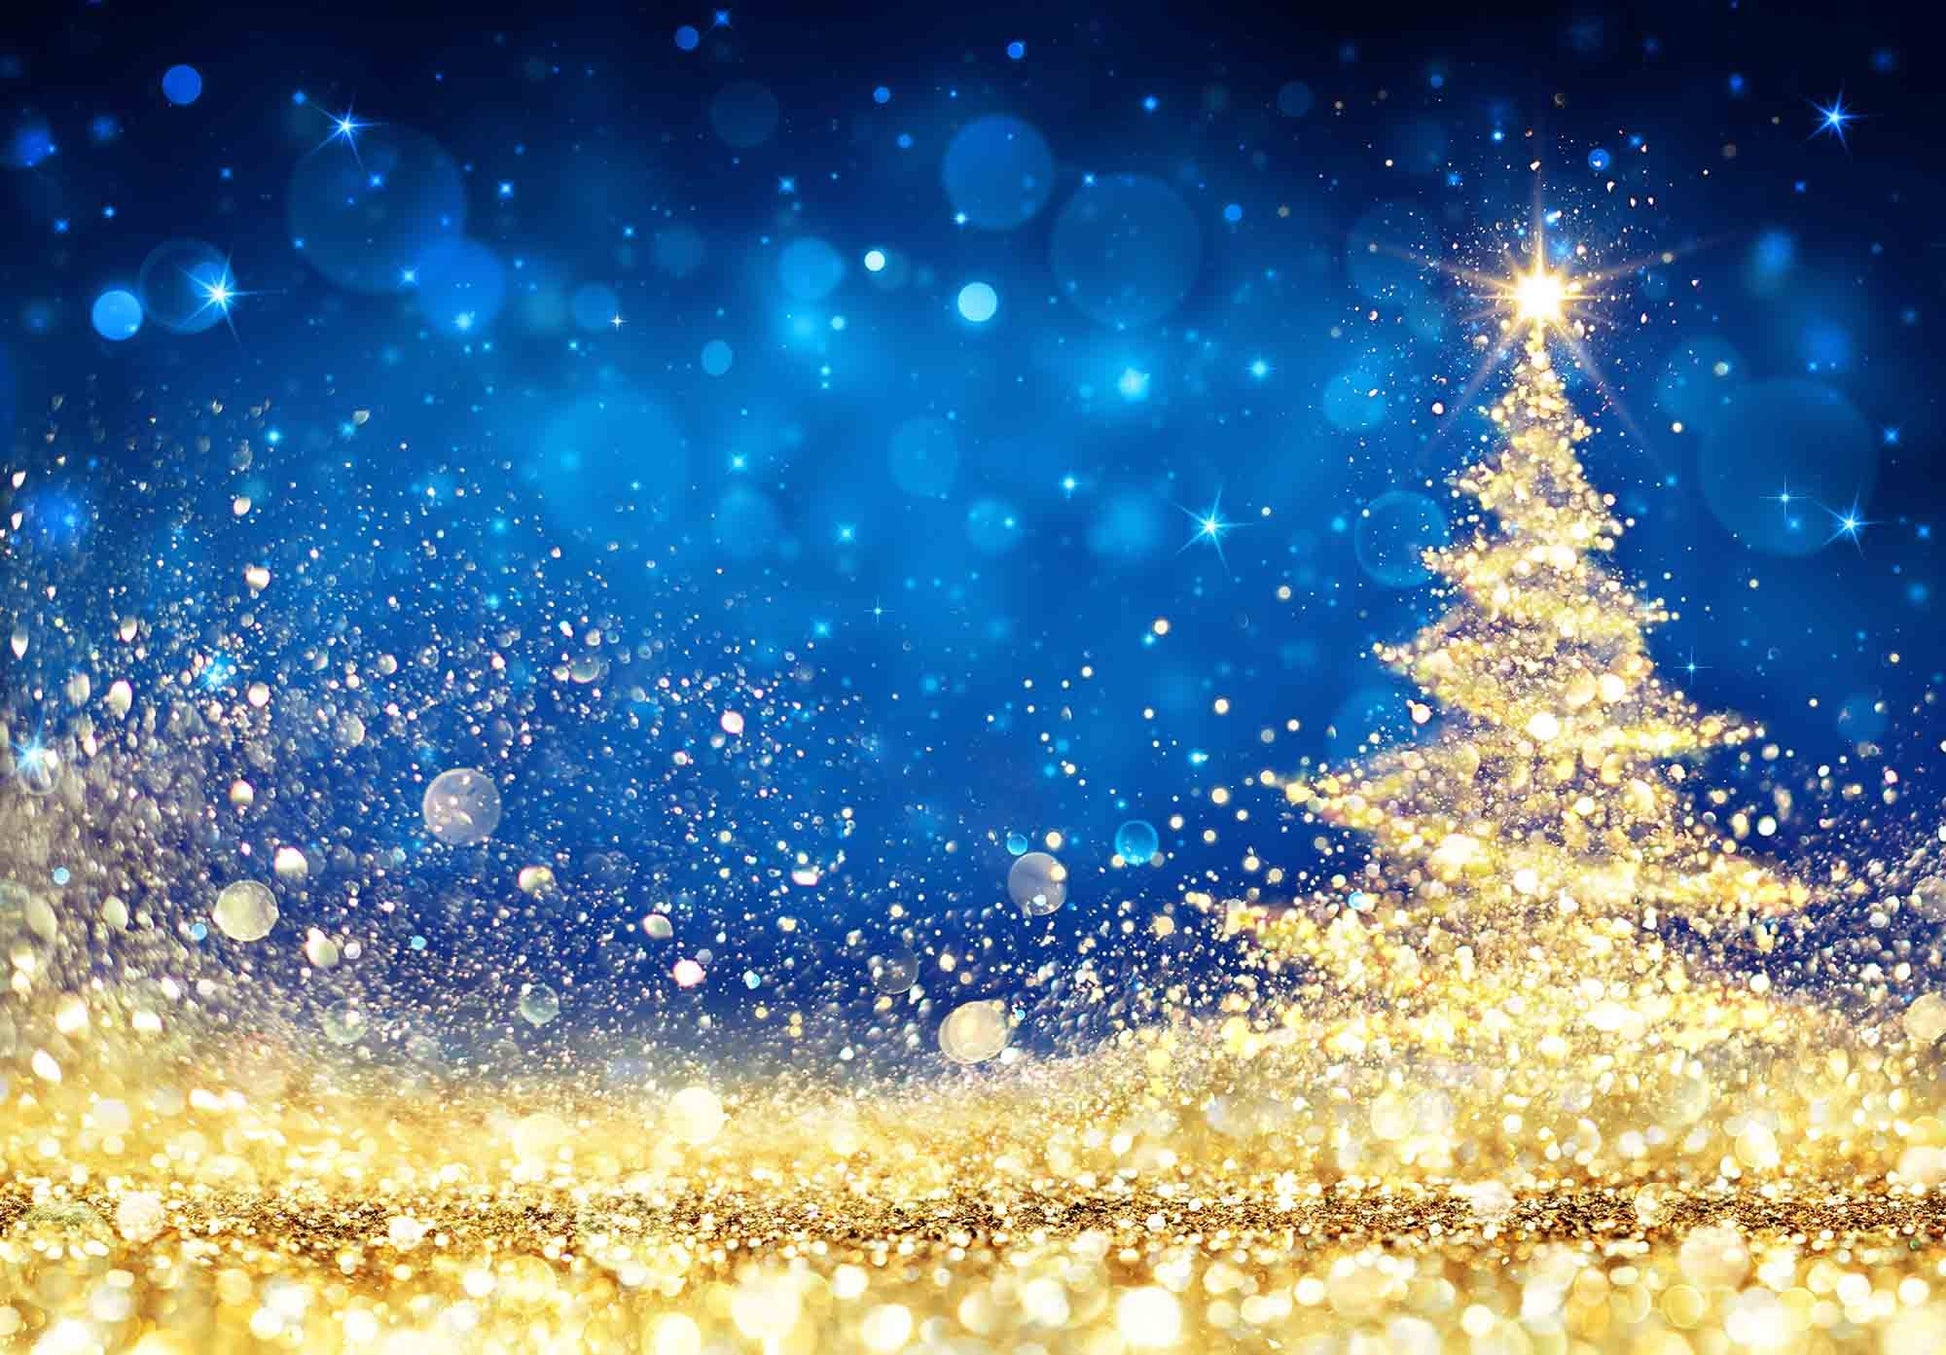 Shiny Christmas Tree - Golden Dust Glittering In The Blue Background Backdrop Shopbackdrop